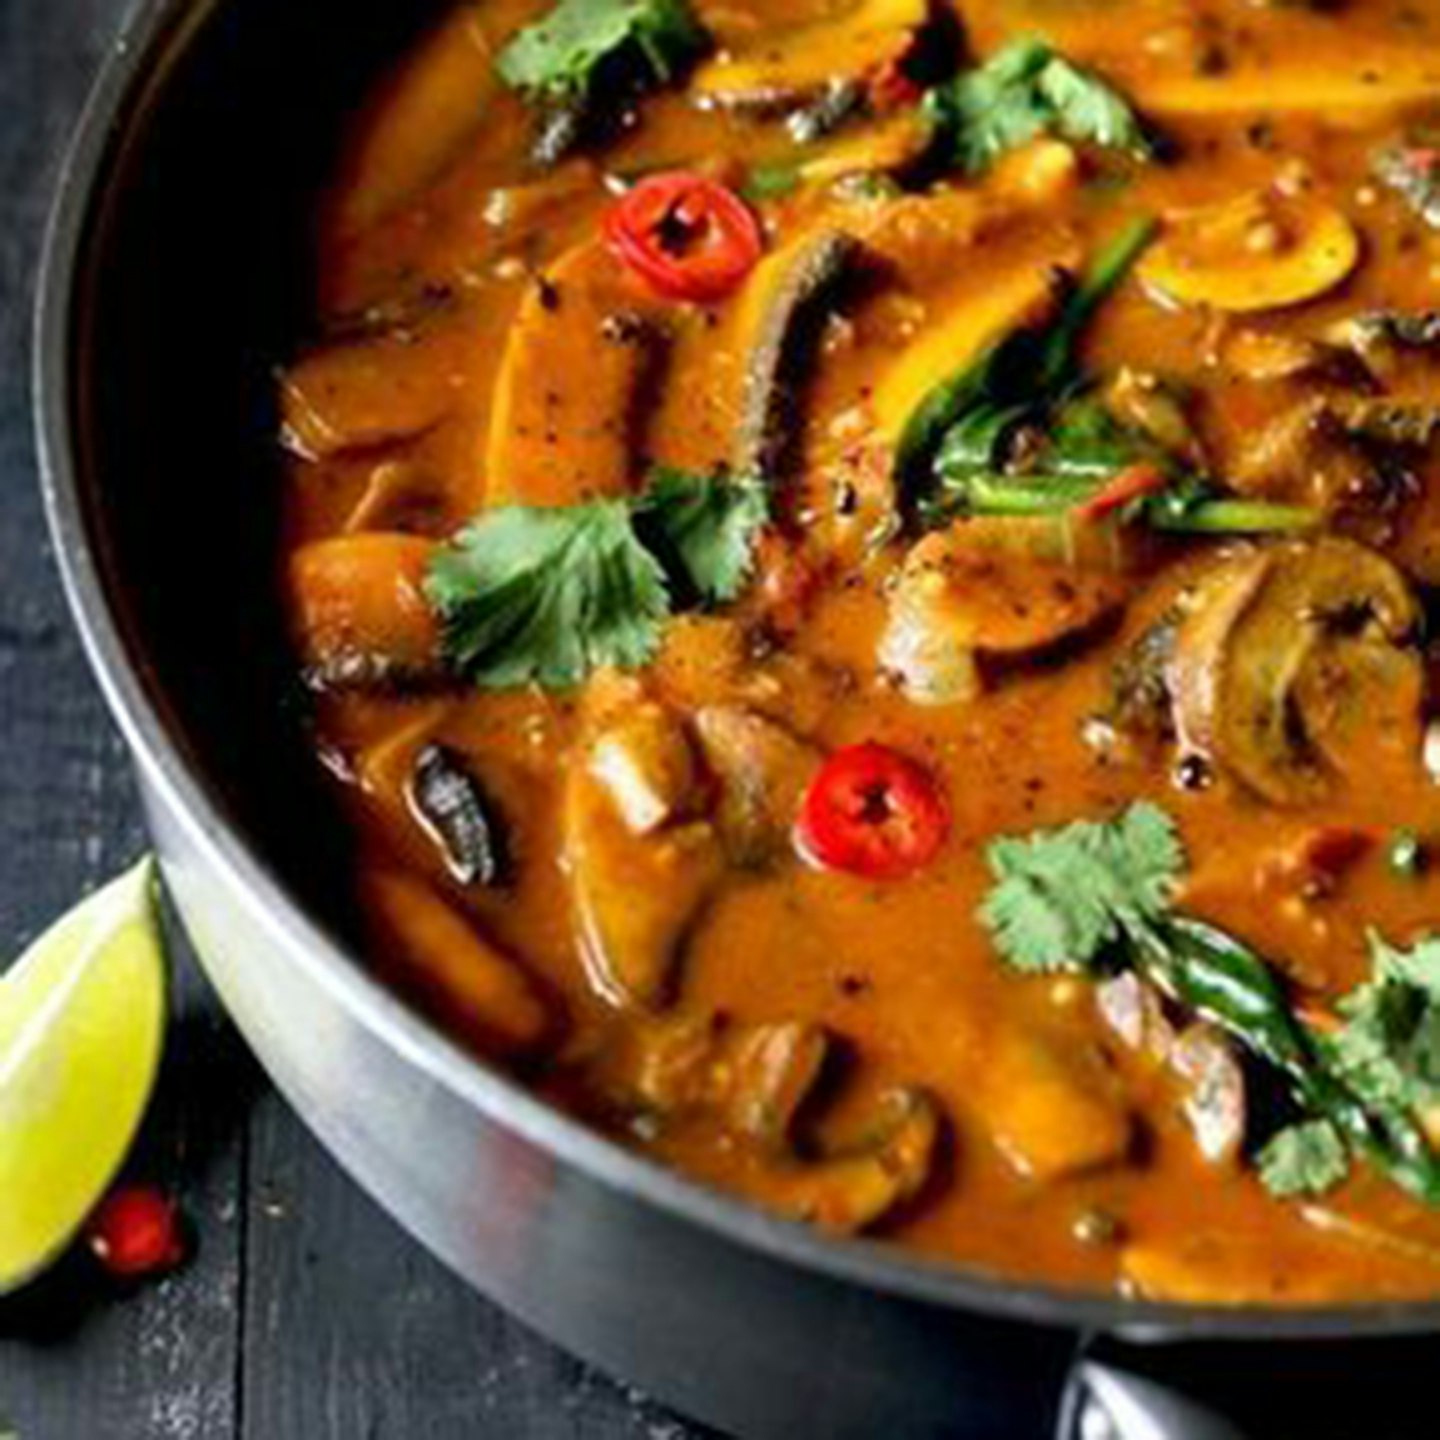 Vegan Curry Recipes